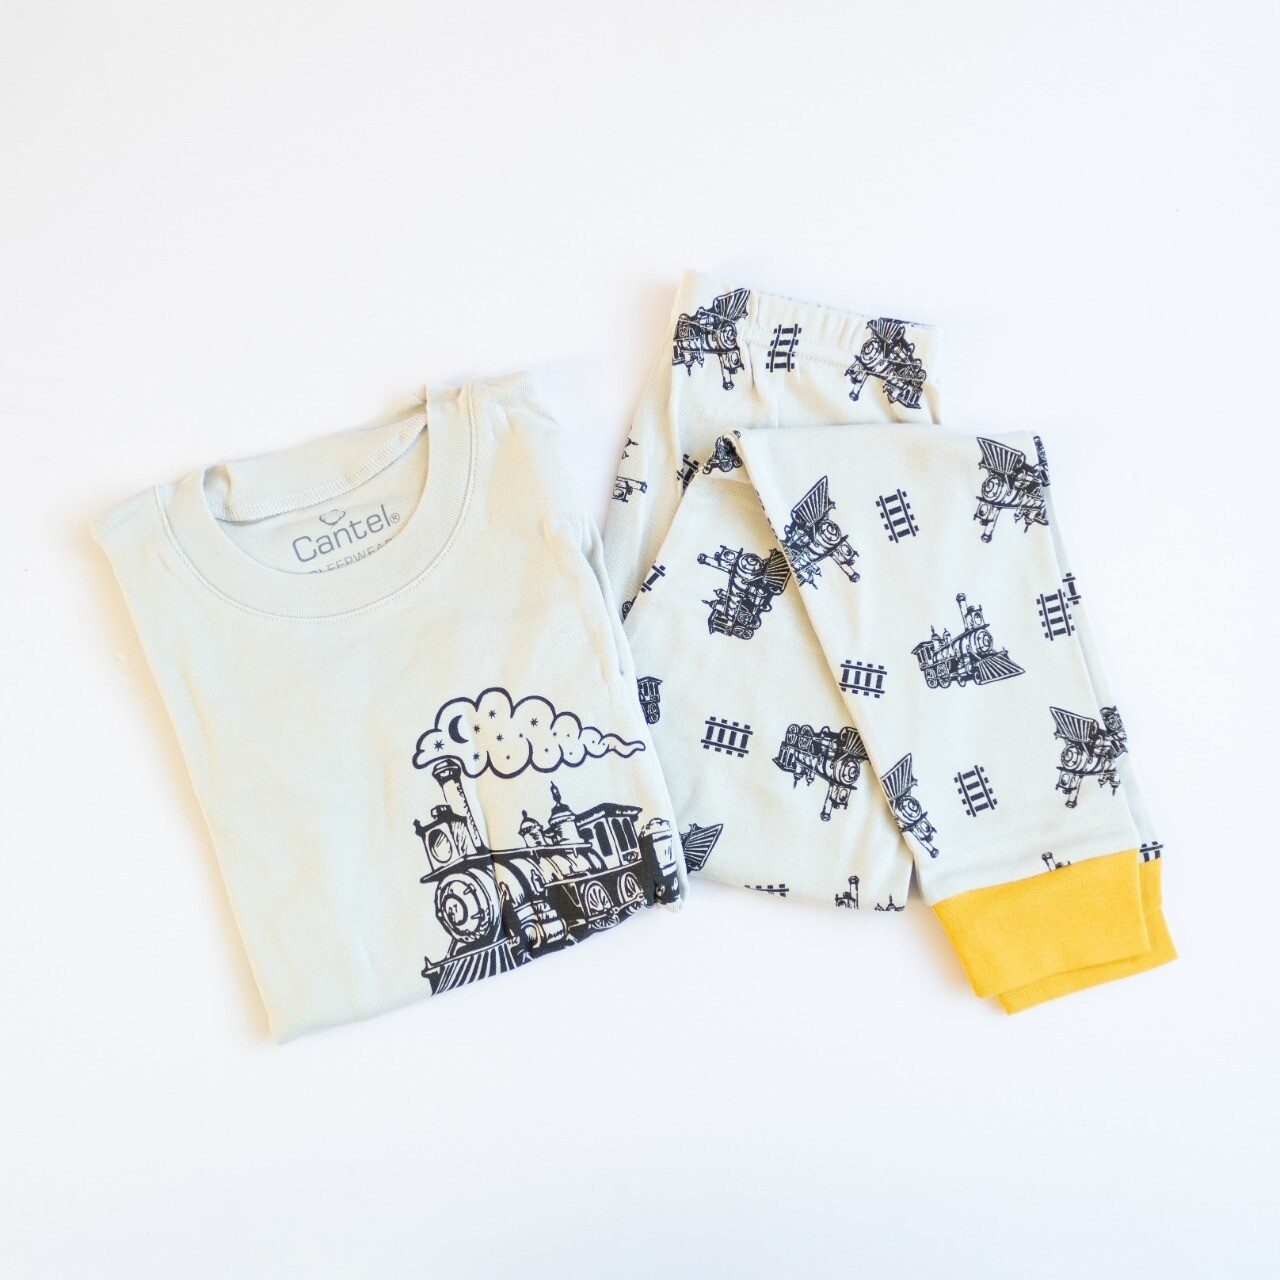 Pijama de algodón para niño H804/TZ725